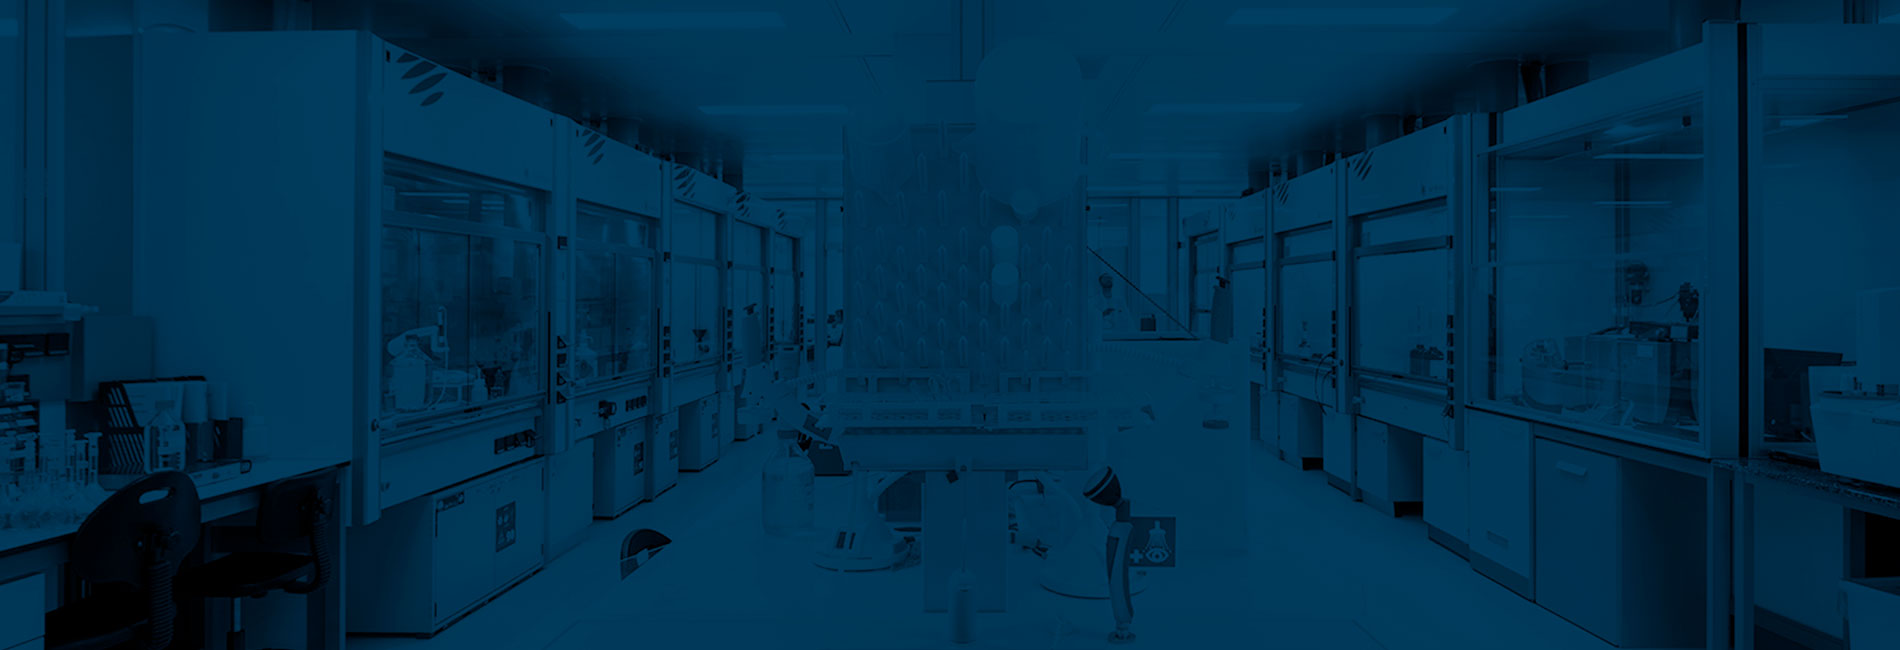 Blue image of a laboratory designed by Burdinola